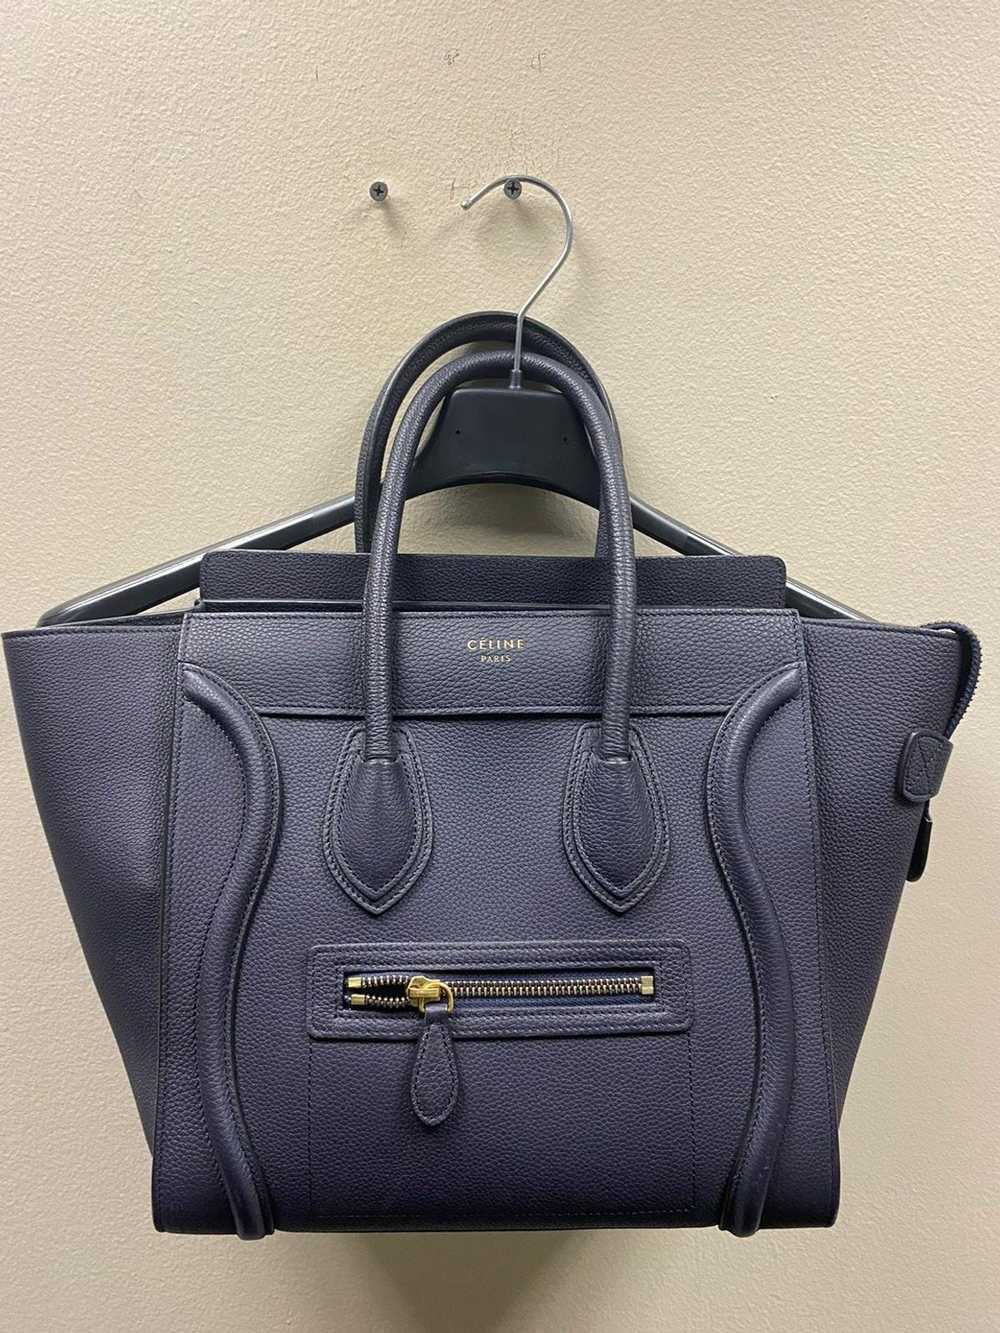 Celine Phantom Bag in Navy Blue - image 3